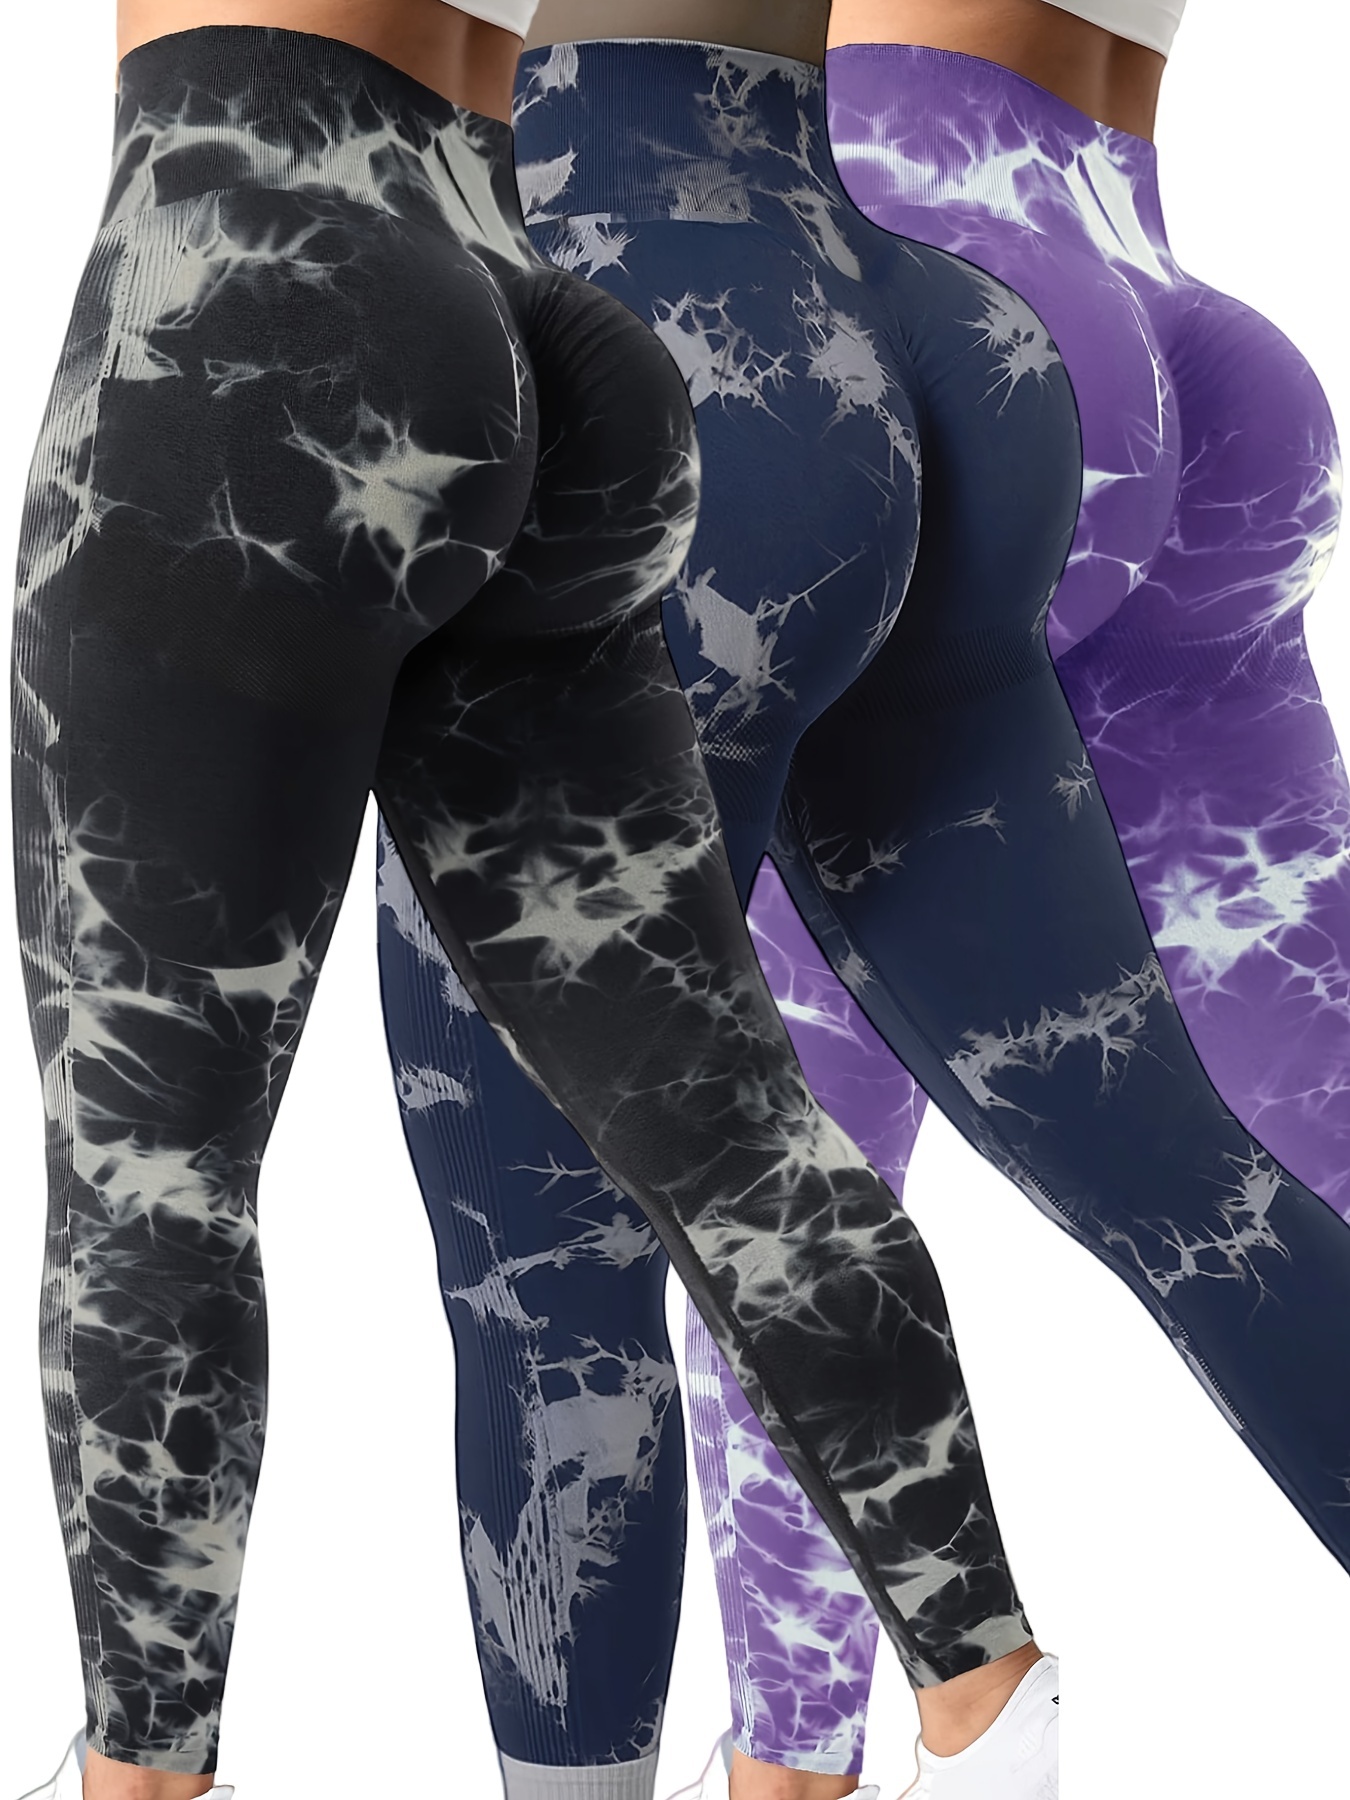 Hfyihgf Tie Dye Seamless Leggings for Women High Waist Outdoor Workout  Running Yoga Pants Scrunch Butt Lifting Stretch Tights Fitness Pant(Black,XL)  